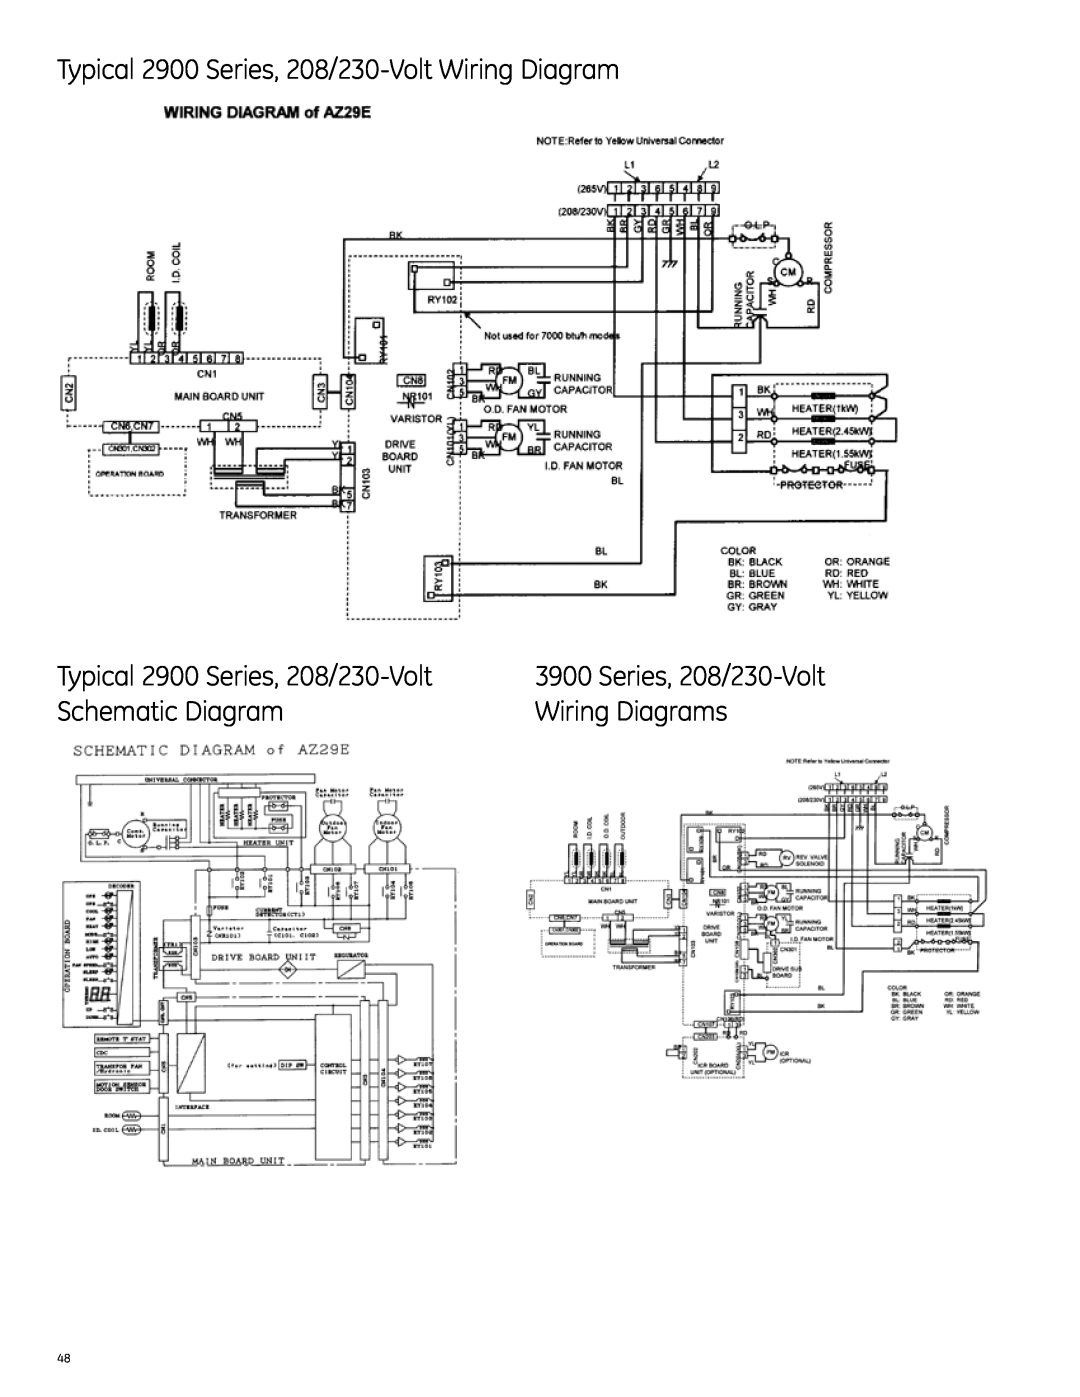 GE Monogram 3900 Series, 5800 Series Typical 2900 Series, 208/230-VoltWiring Diagram, Schematic Diagram, Wiring Diagrams 